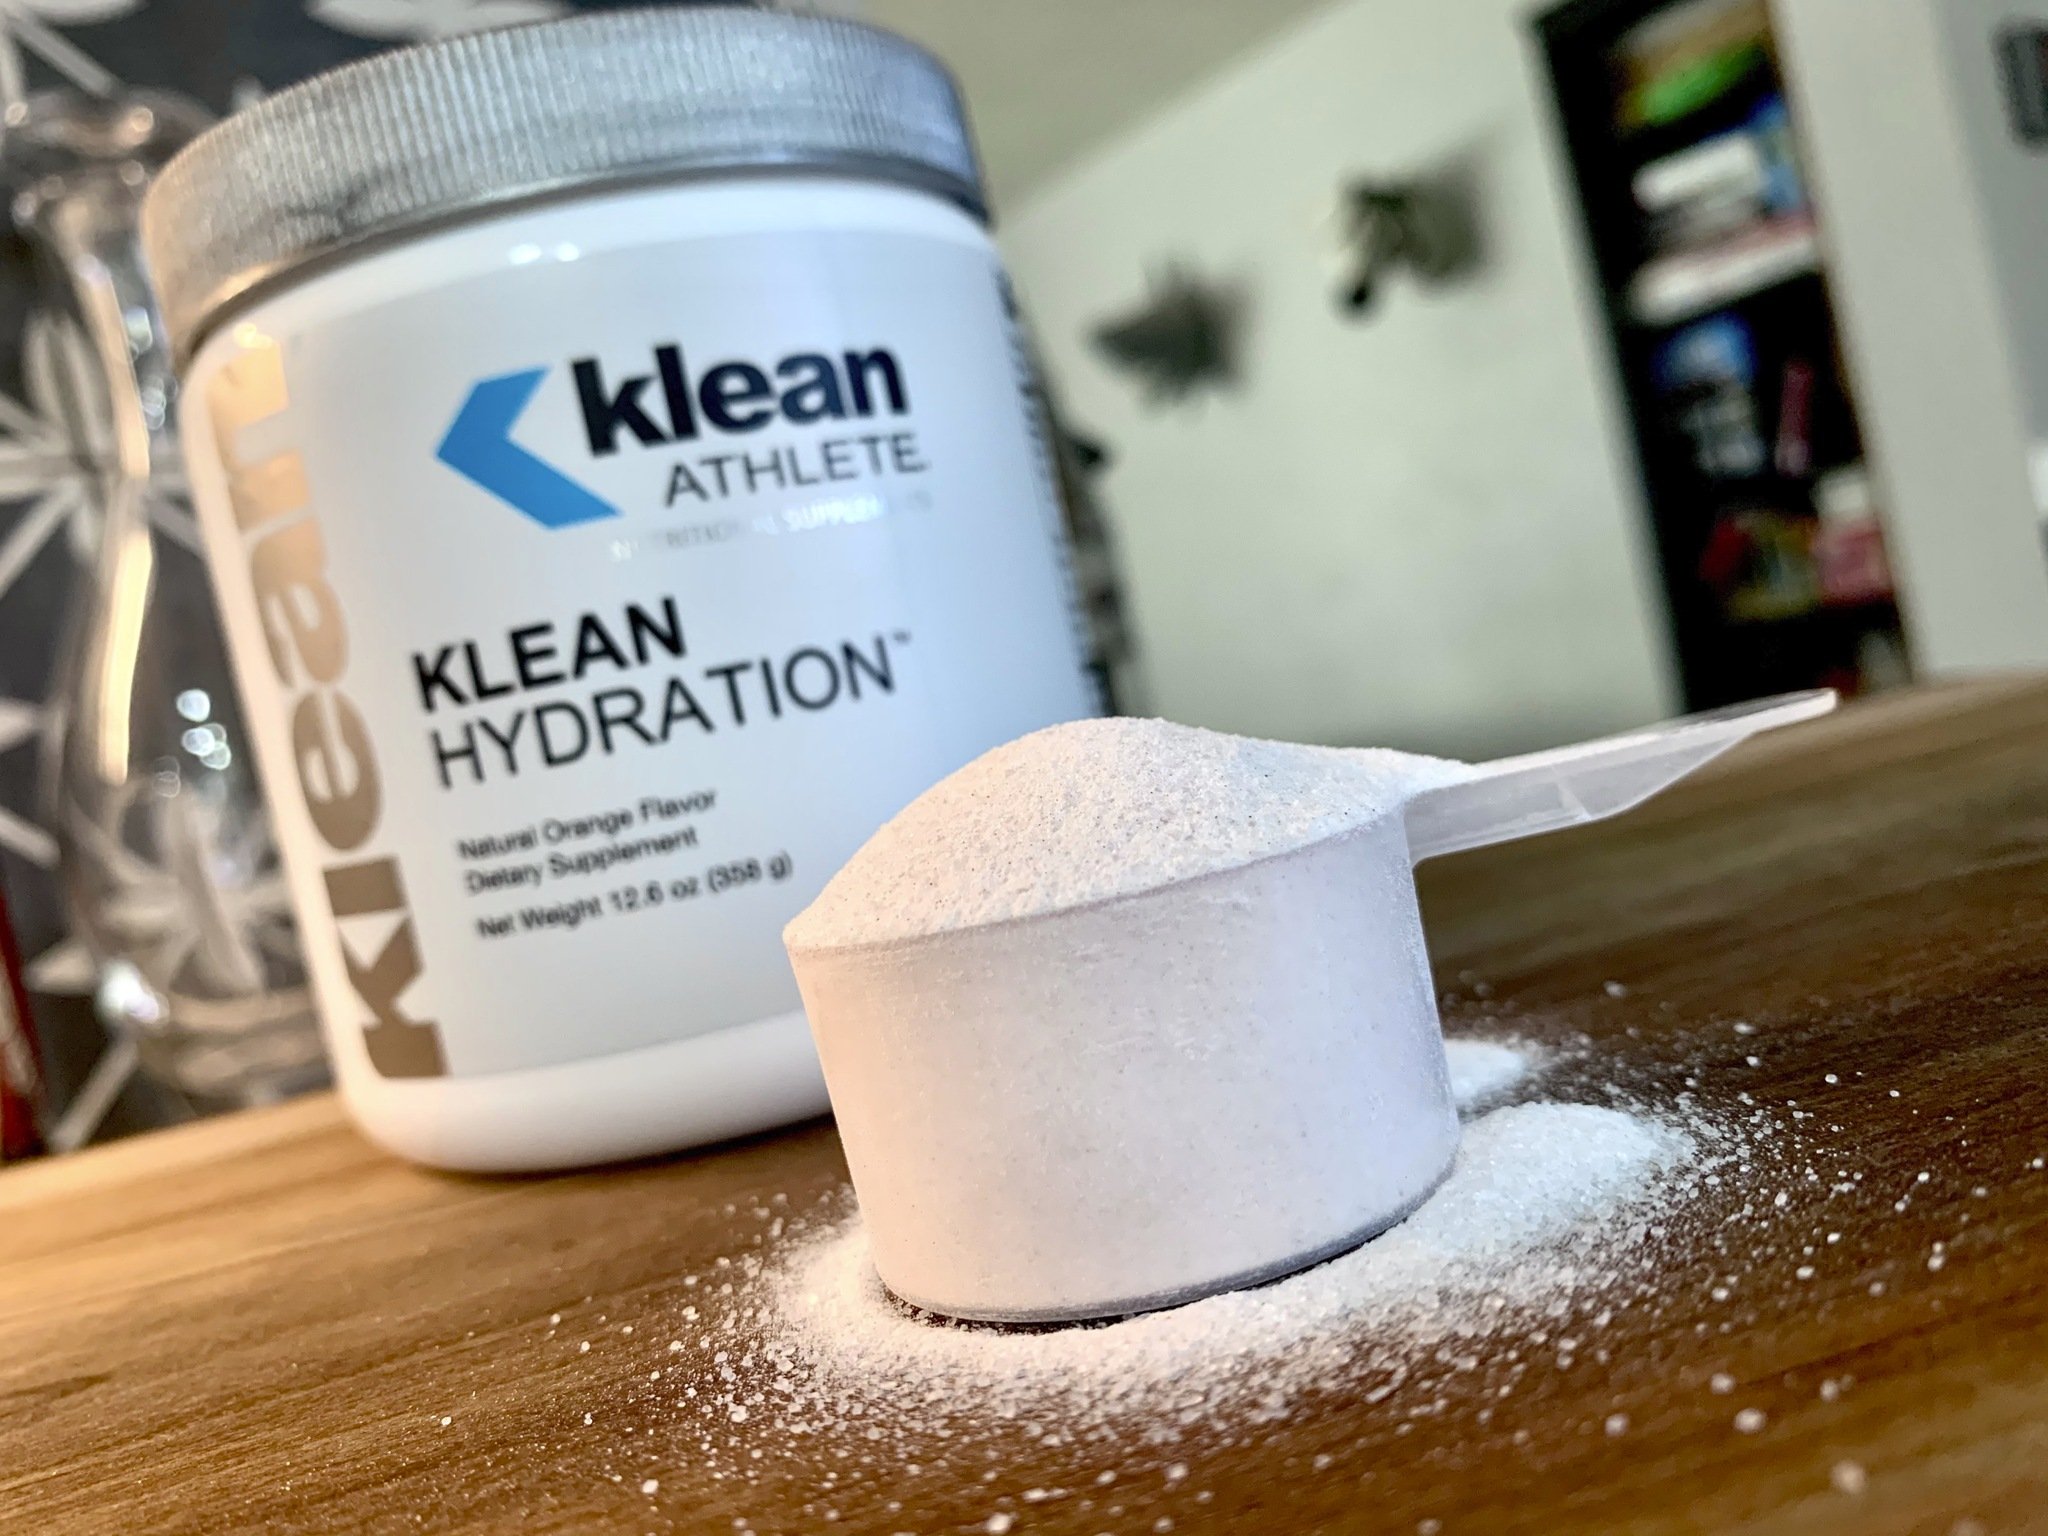 klean athlete hydration powder